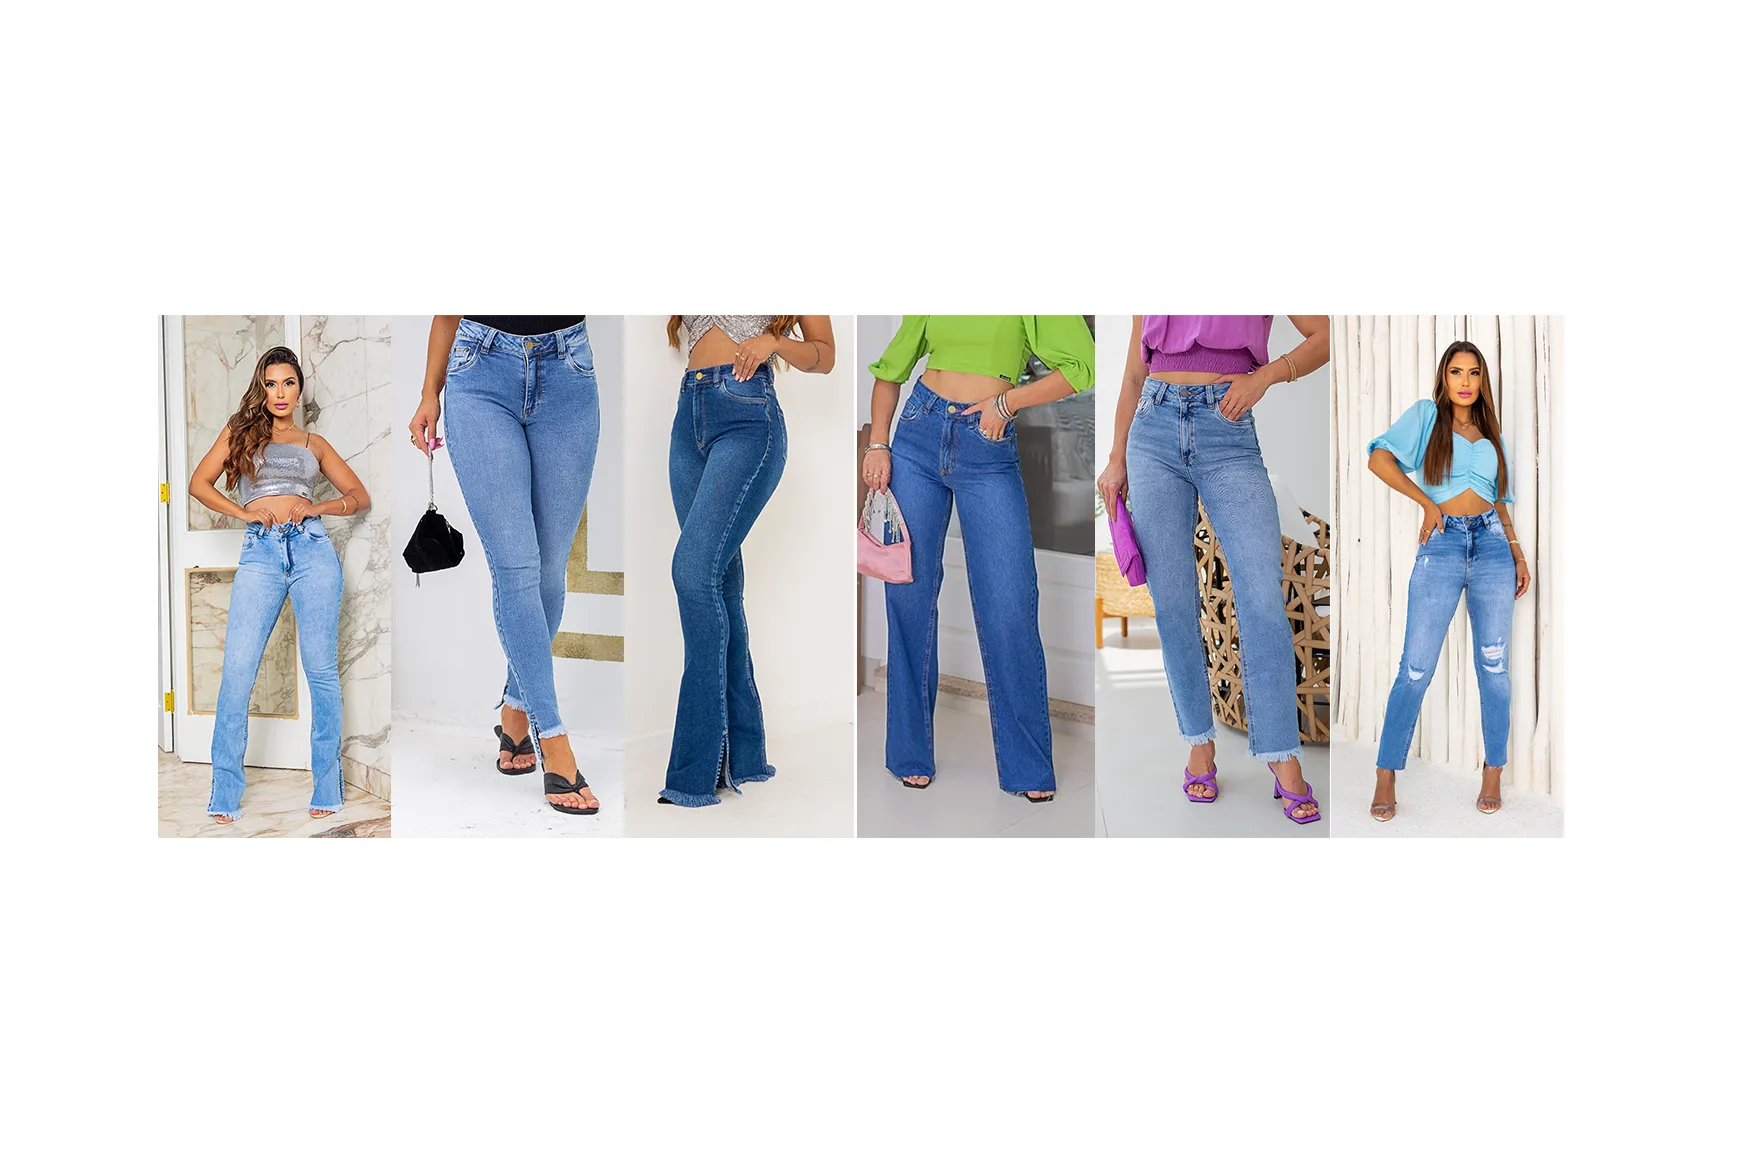 Os cortes de jeans que valorizam cada biotipo